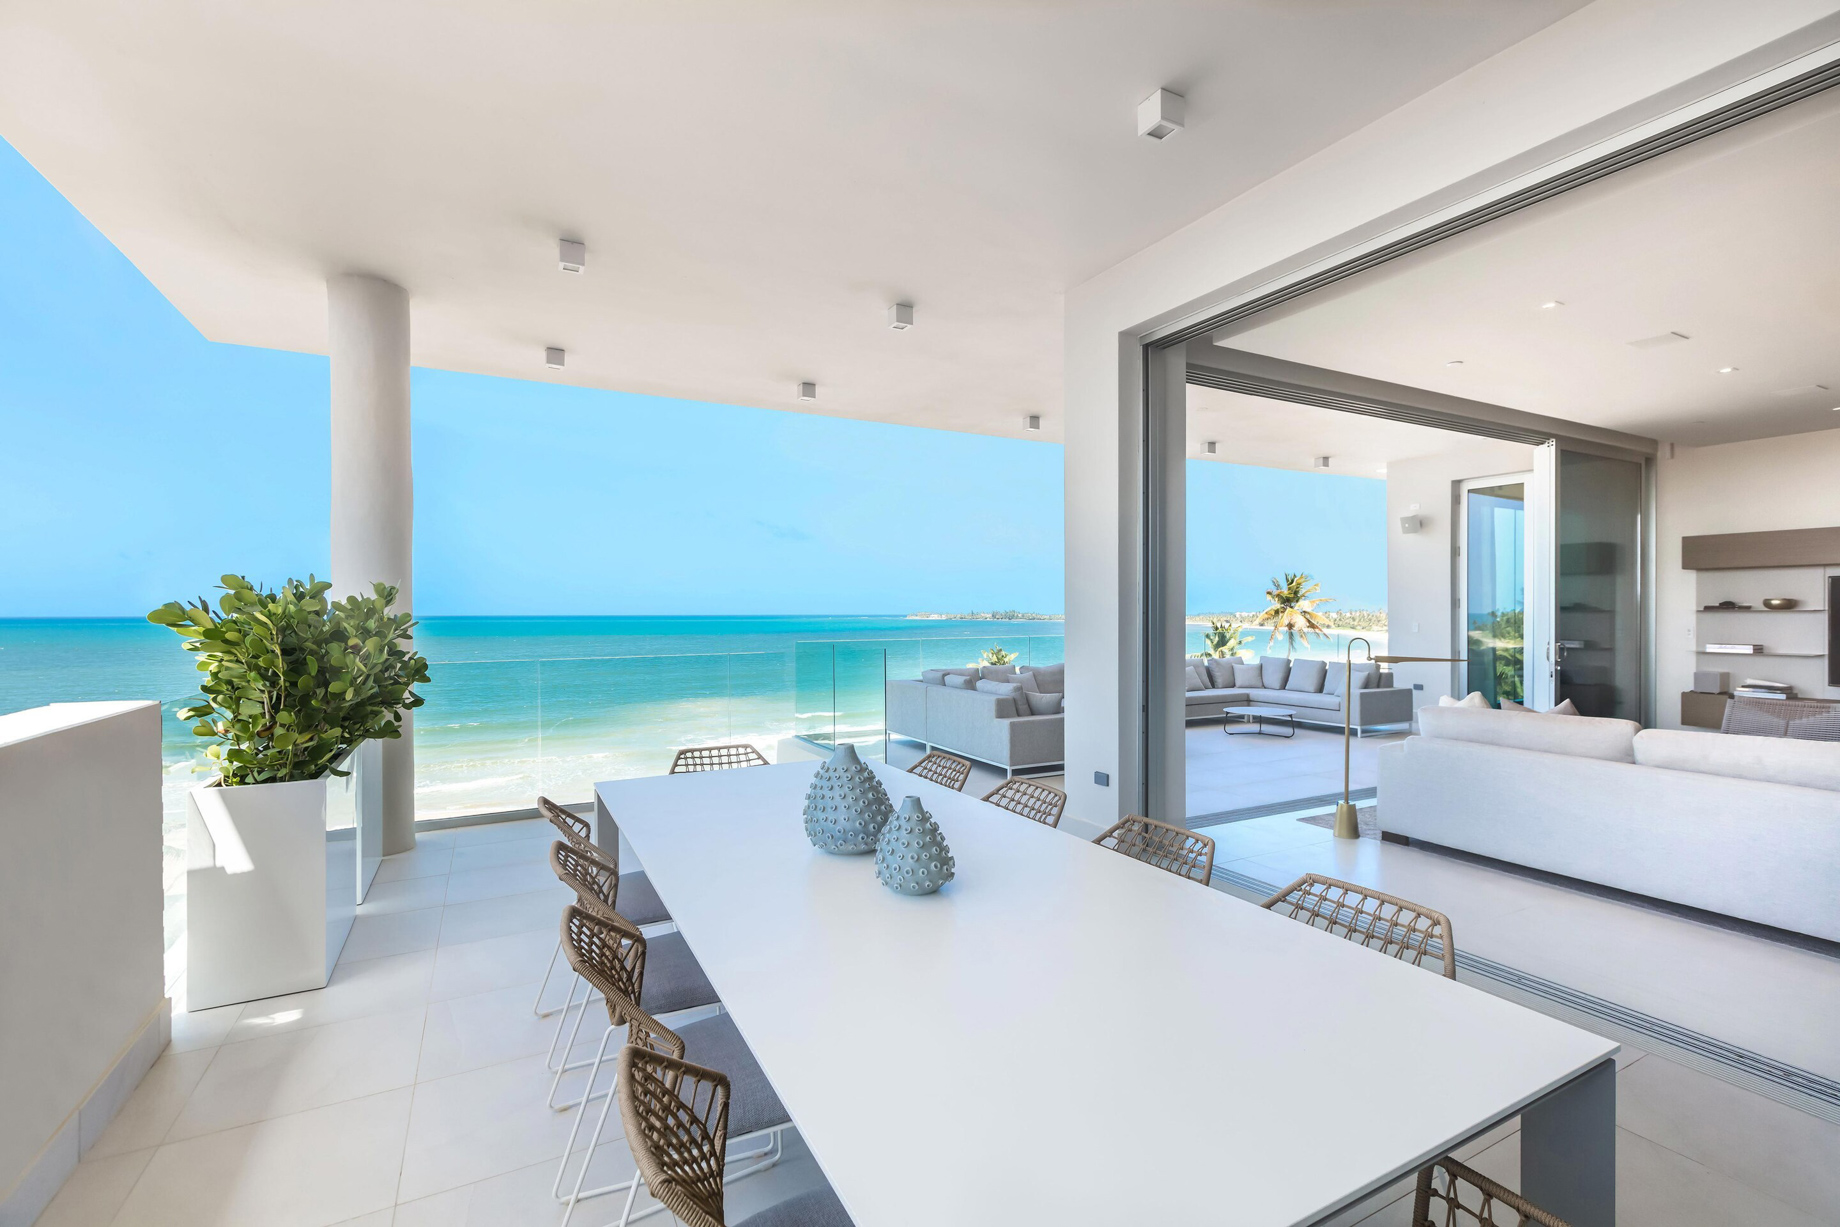 The St. Regis Bahia Beach Resort – Rio Grande, Puerto Rico – Ocean Drive Residences First Level Exterior Living